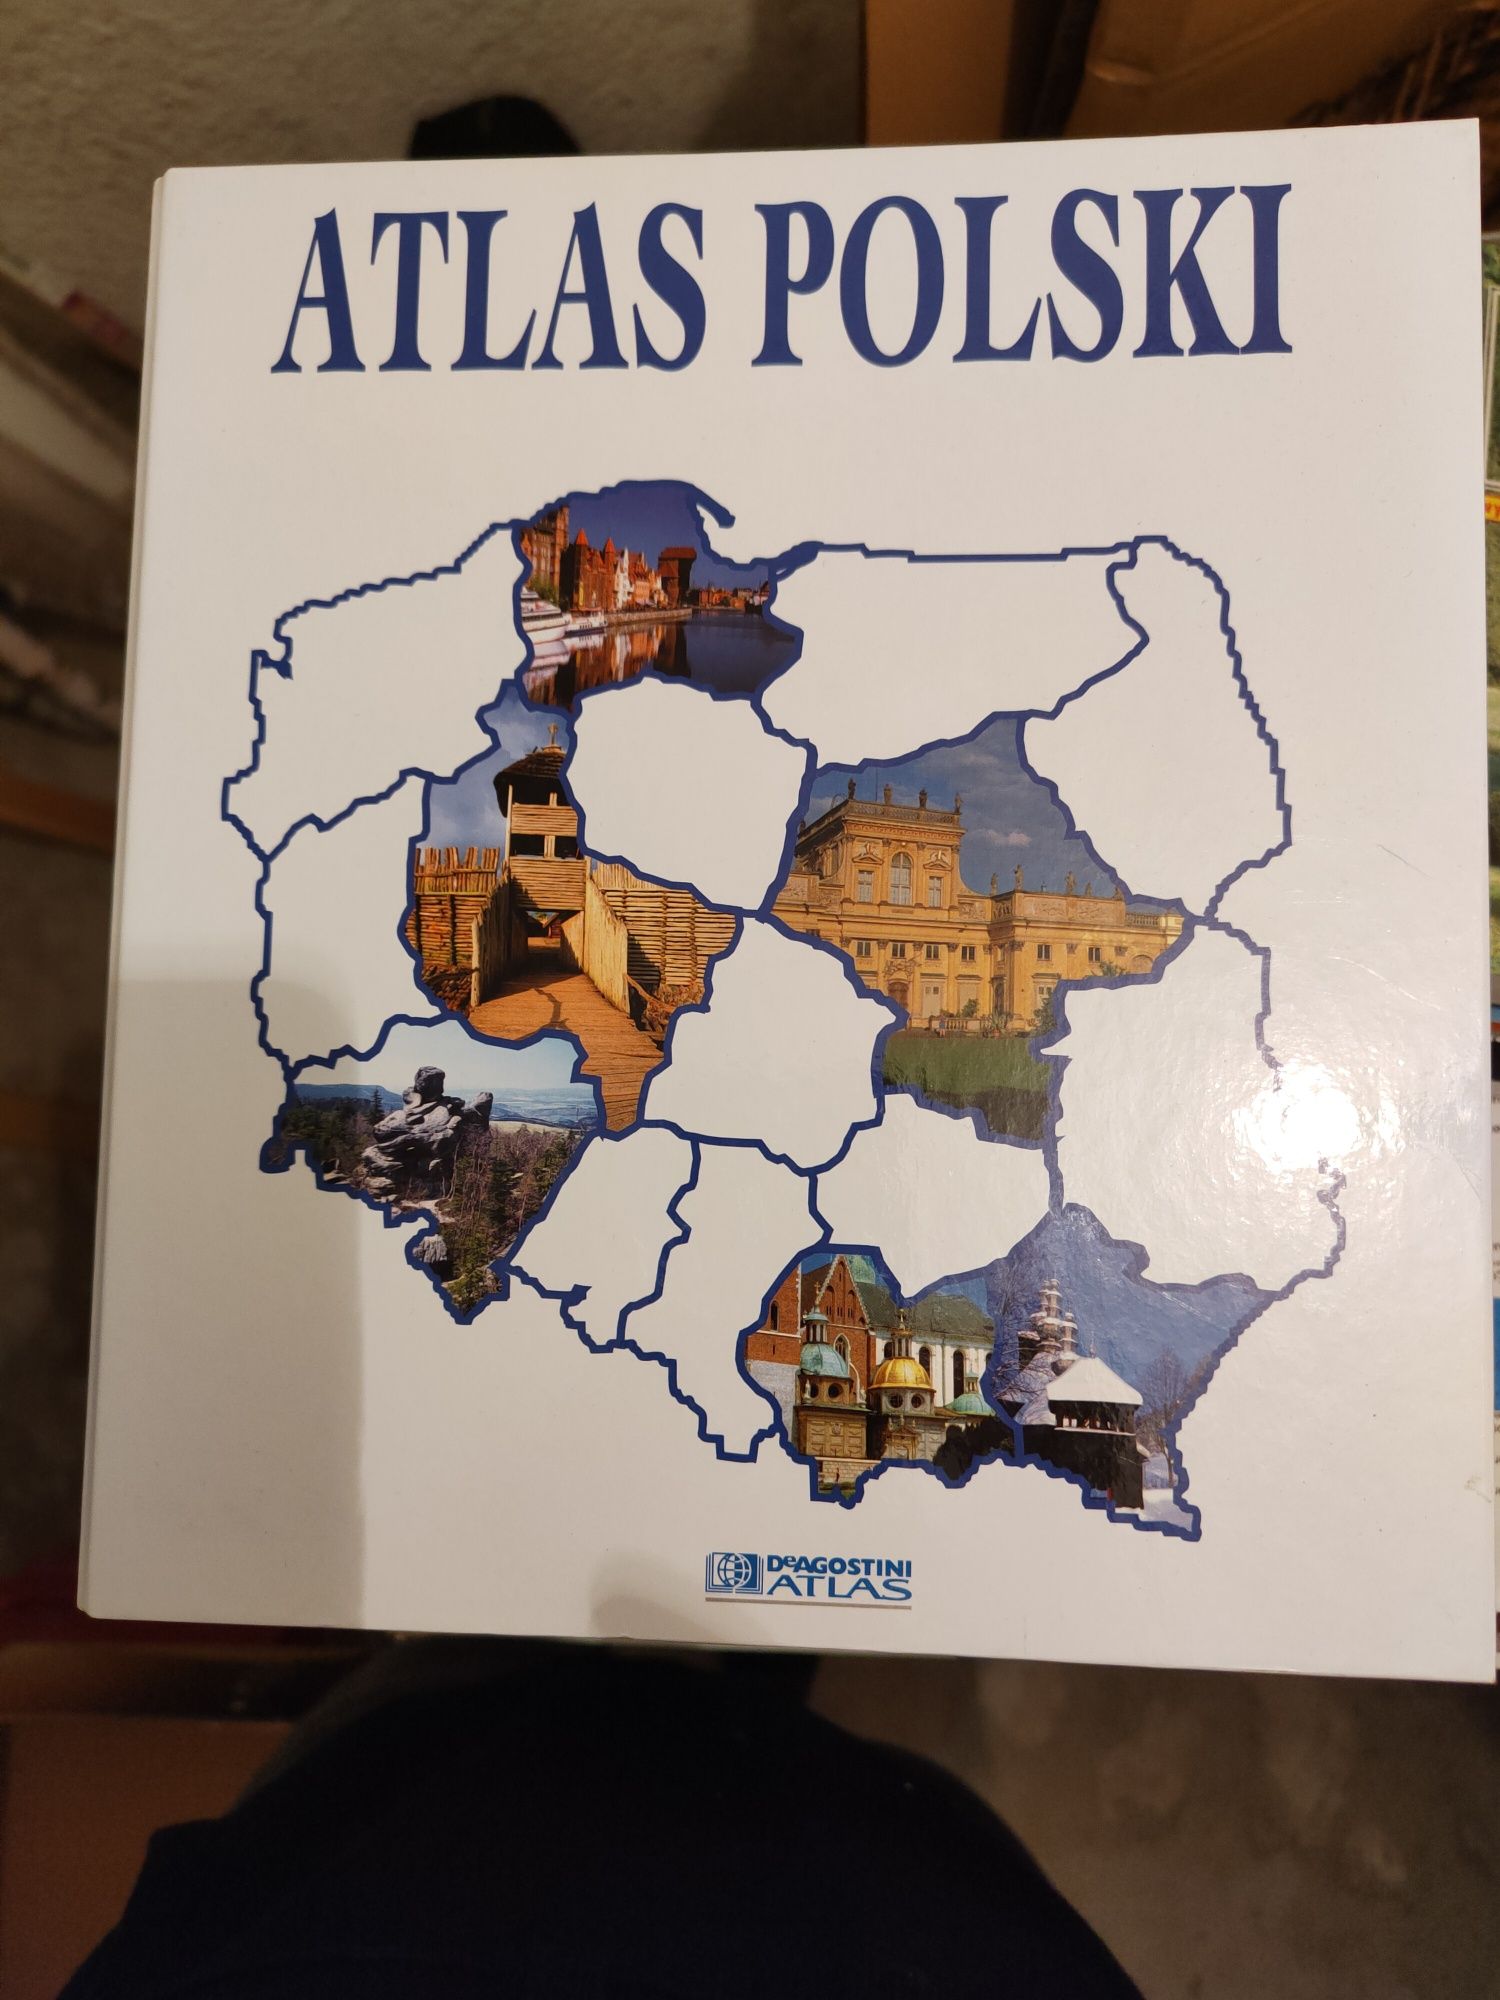 Atlas Polski - kolekcja Deagostini